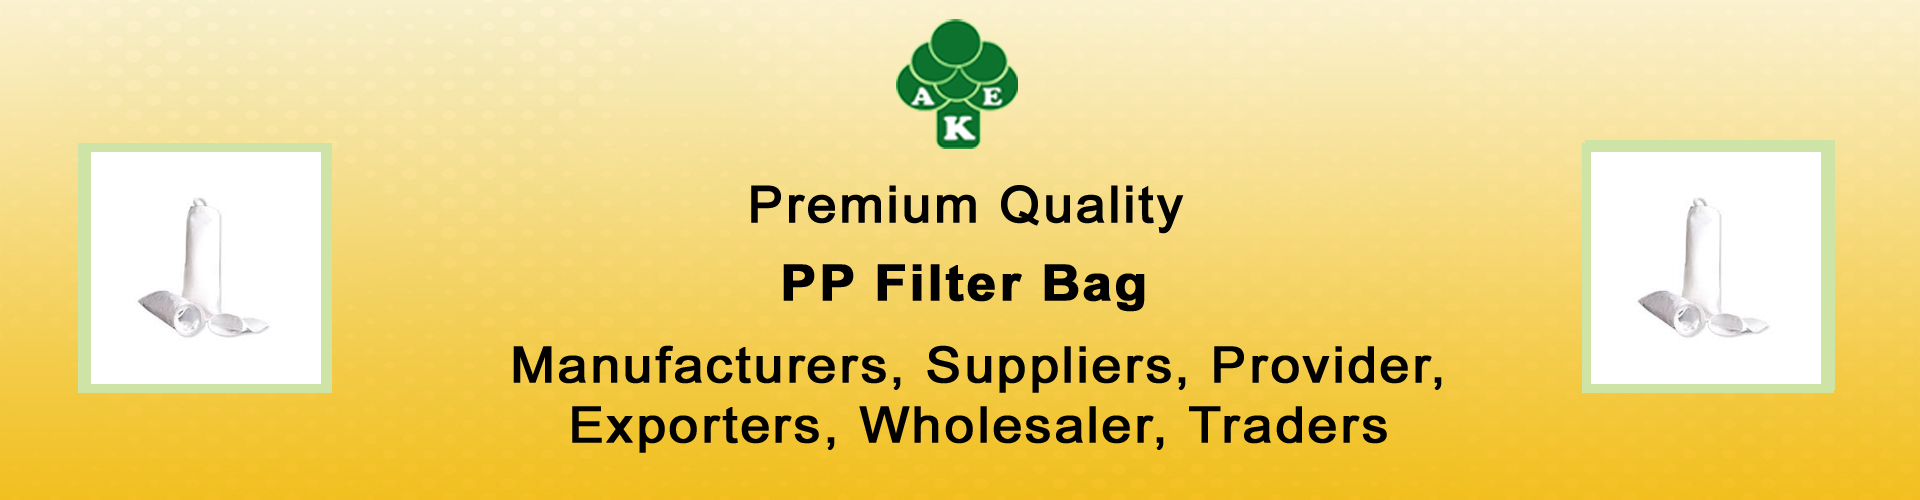 PP Filter Bag